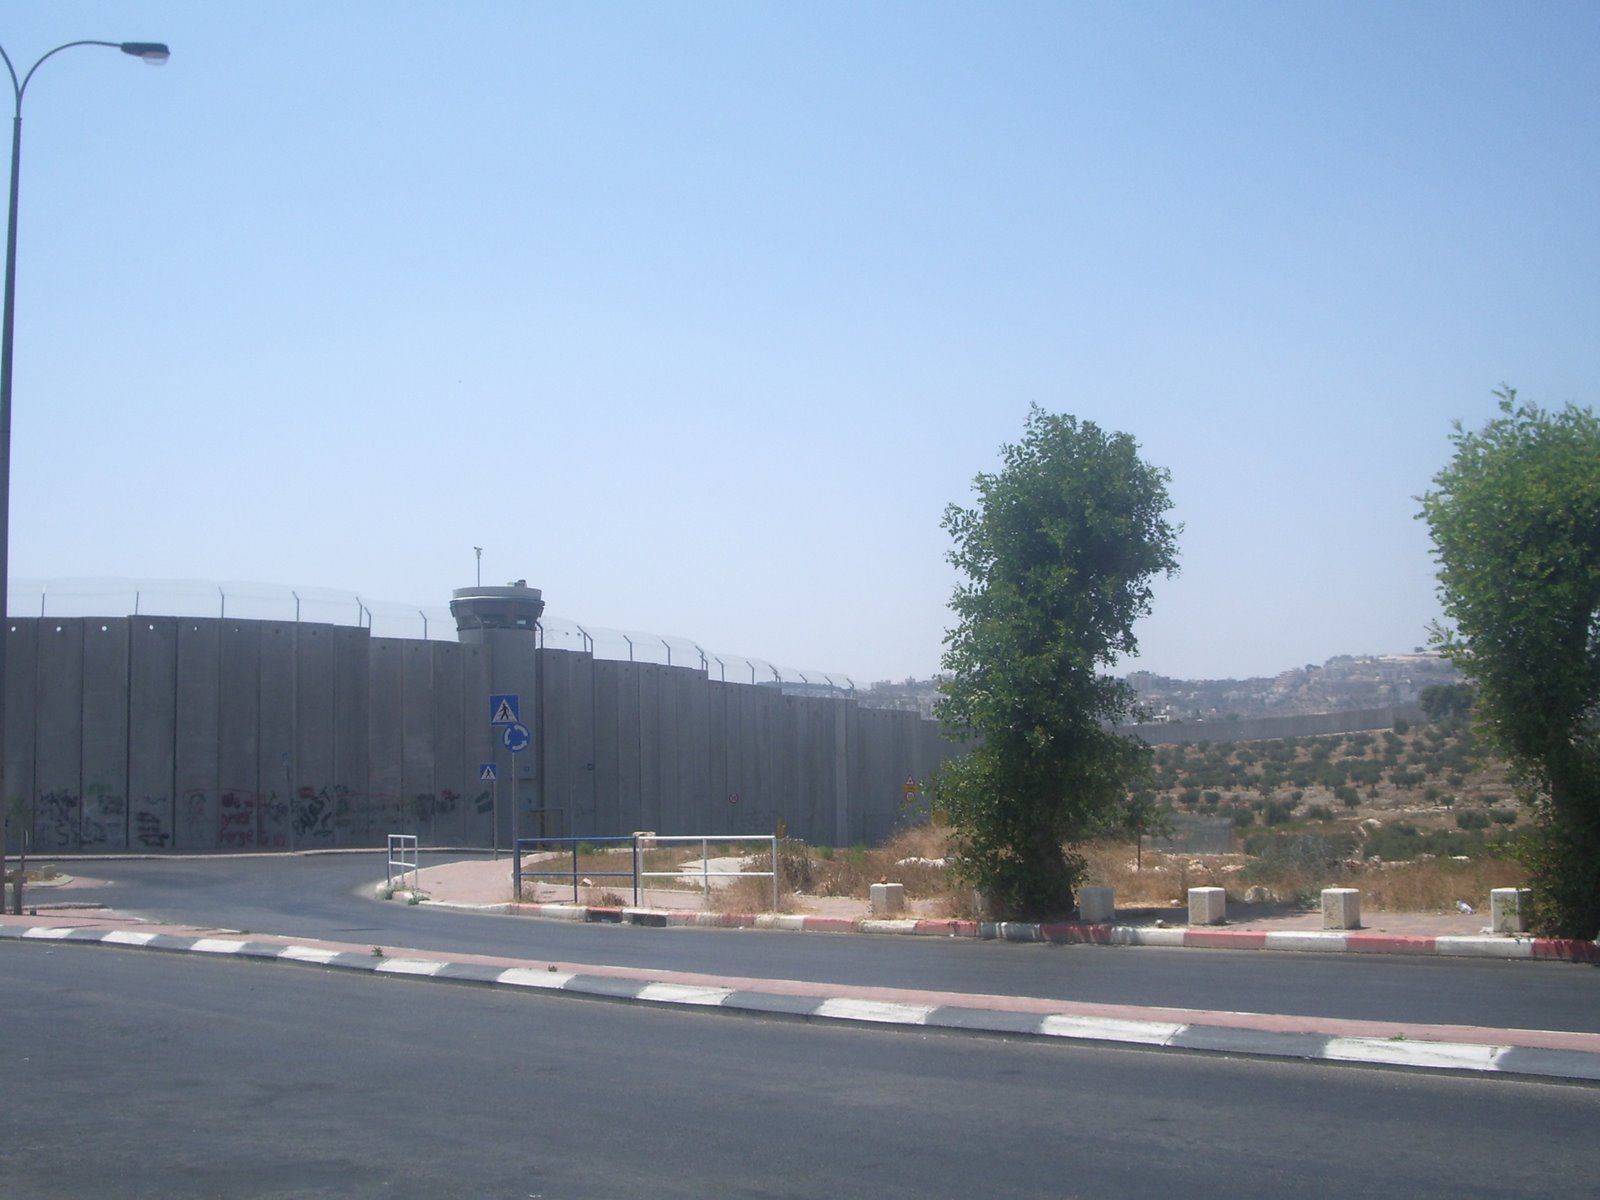 El mur que aïlla Betlemhem